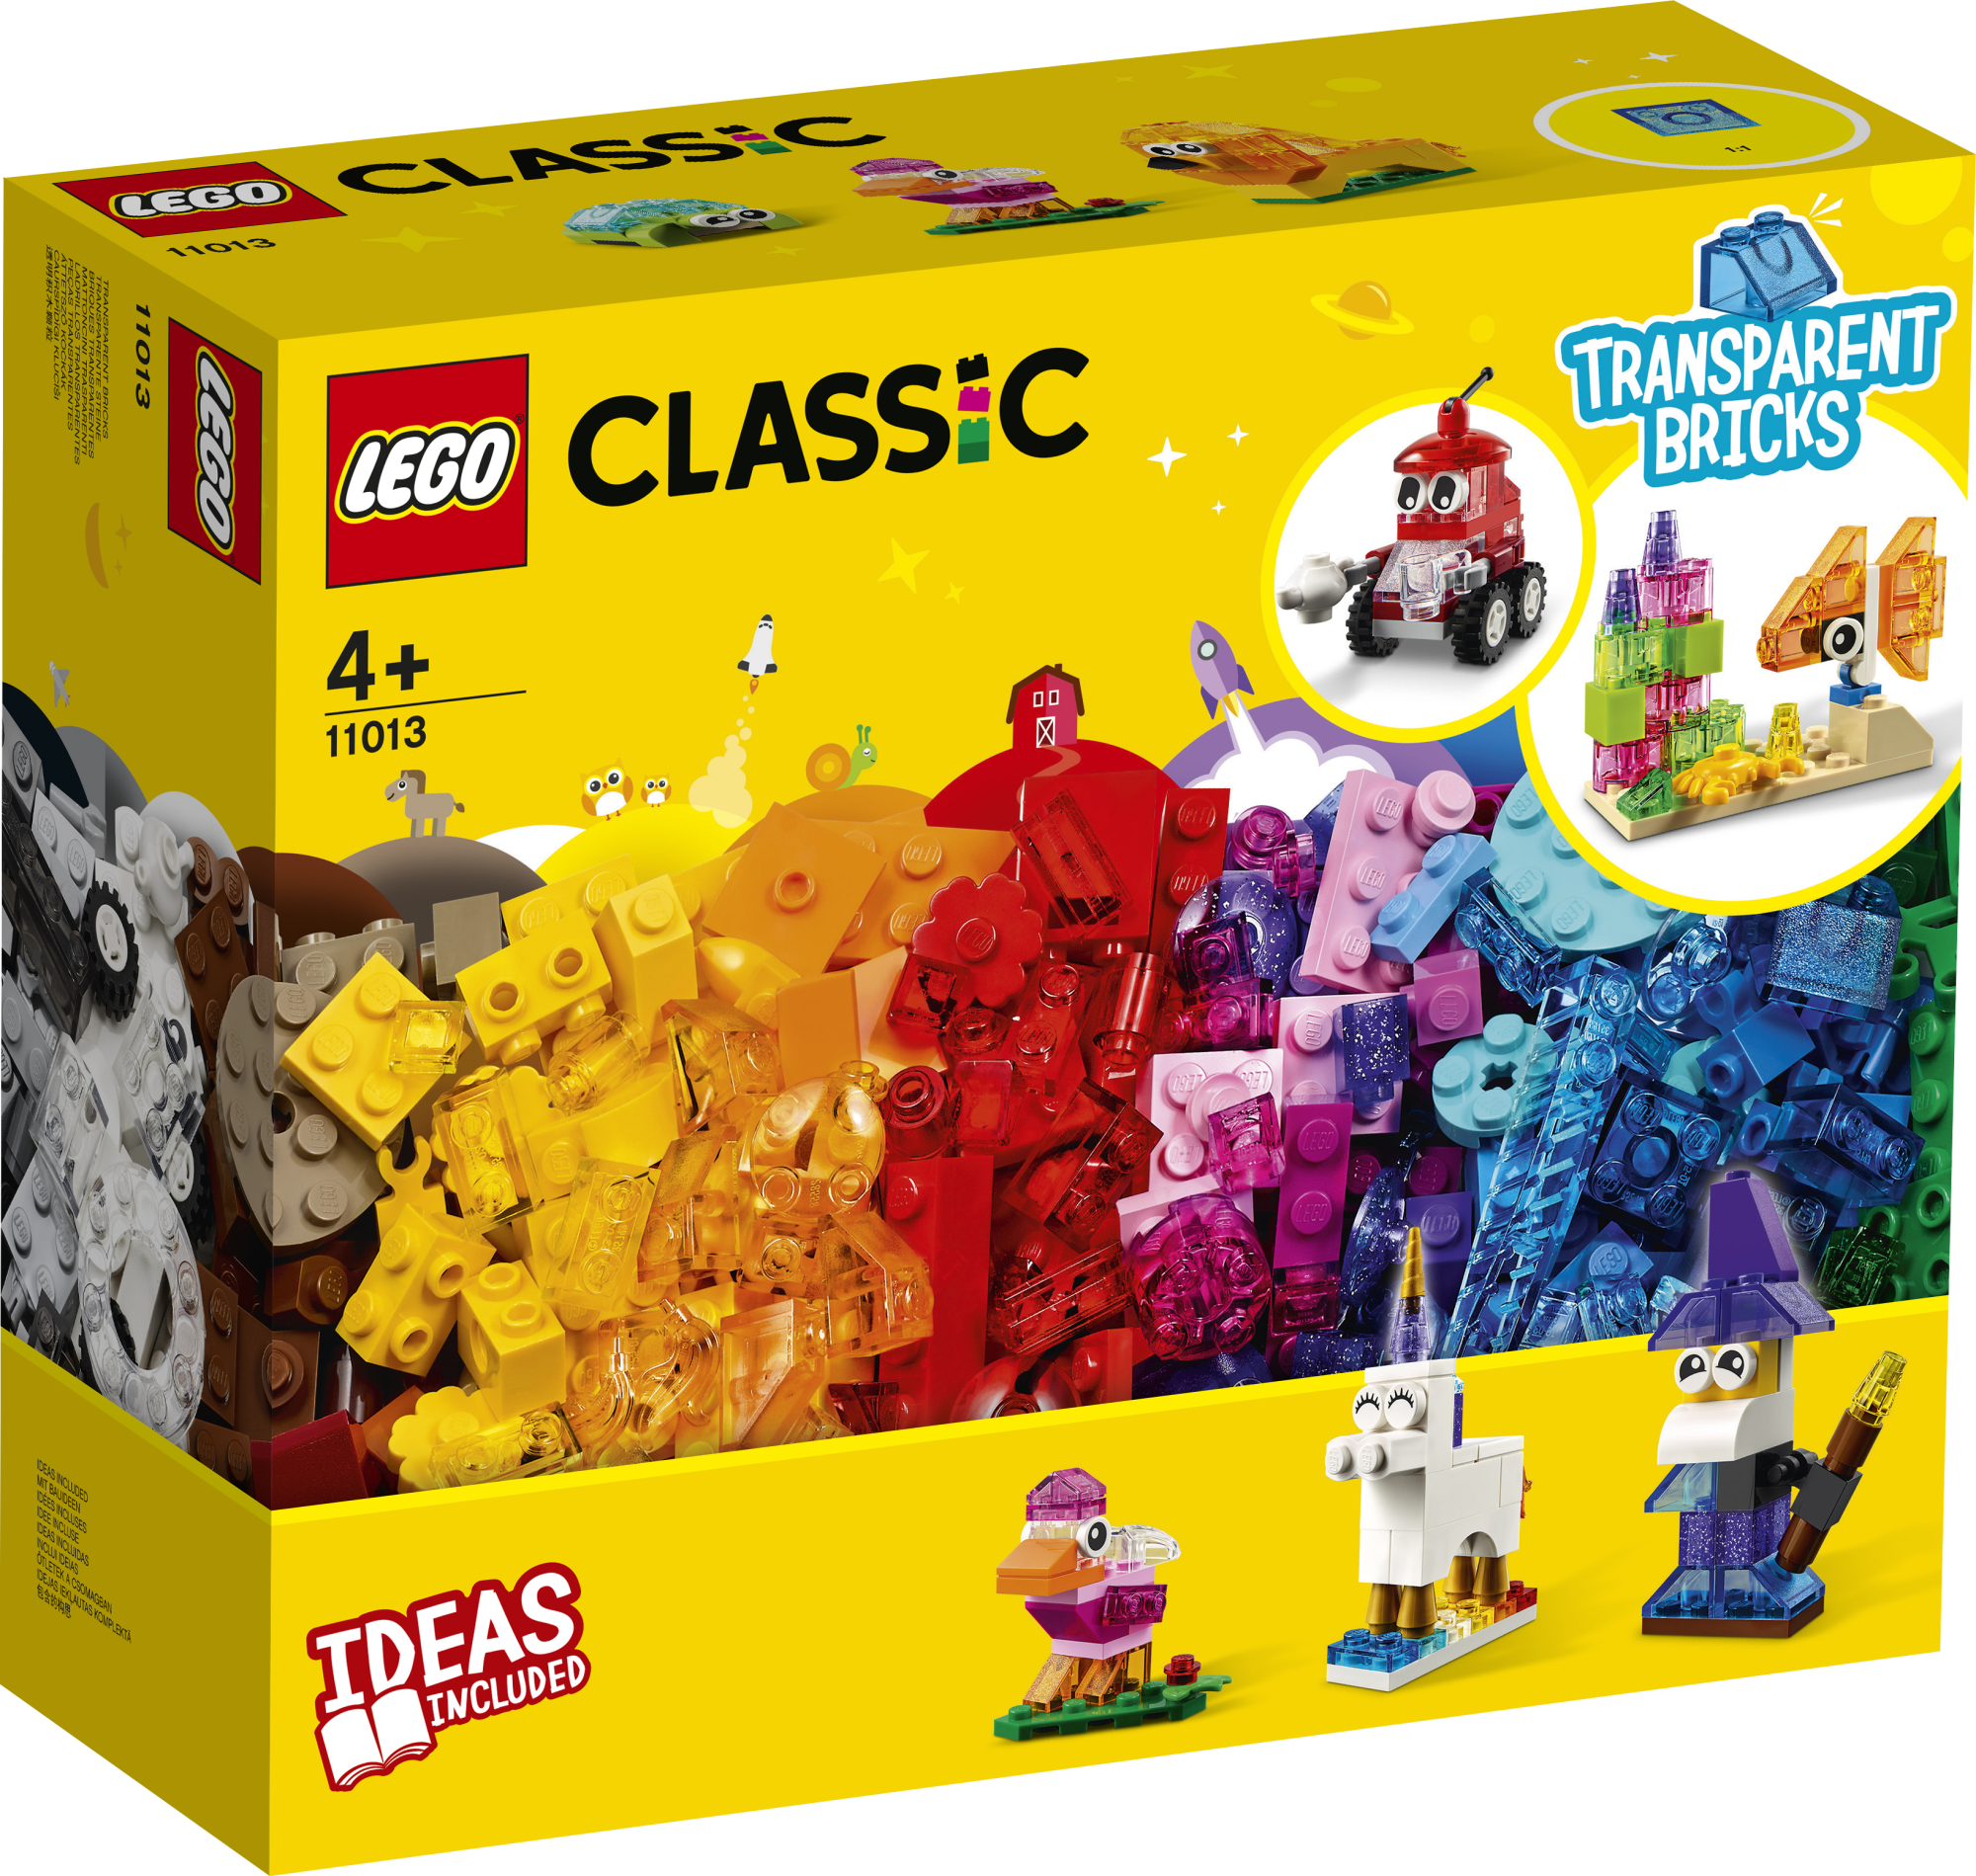 LEGO Classic - Mattoncini trasparenti creativi